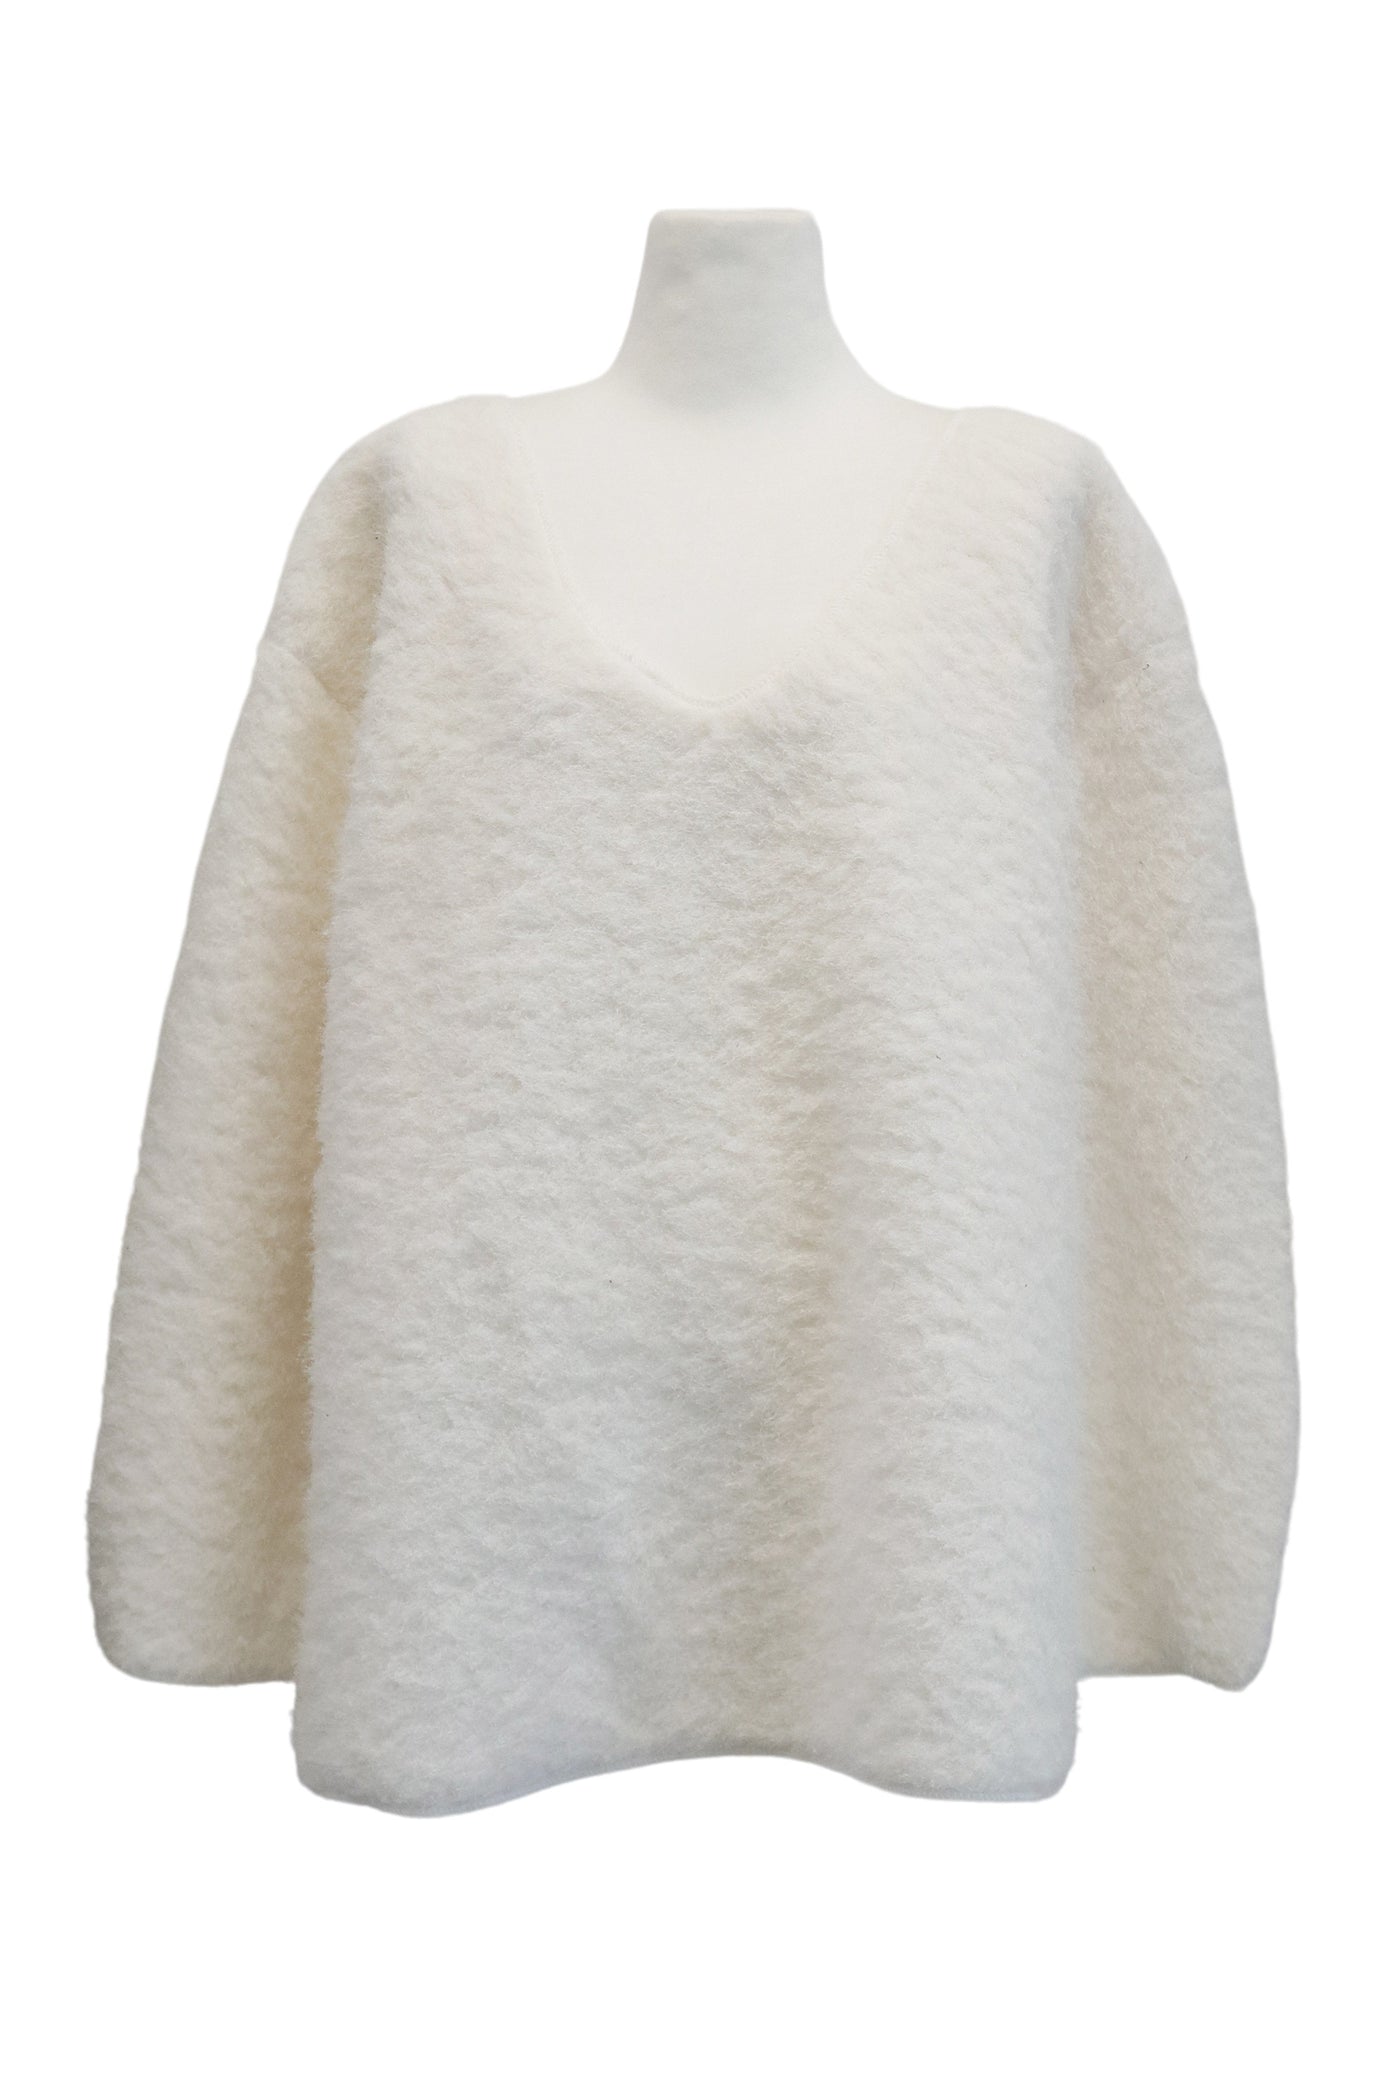 storets.com Rosanna Fuzzy Sweater / Dress